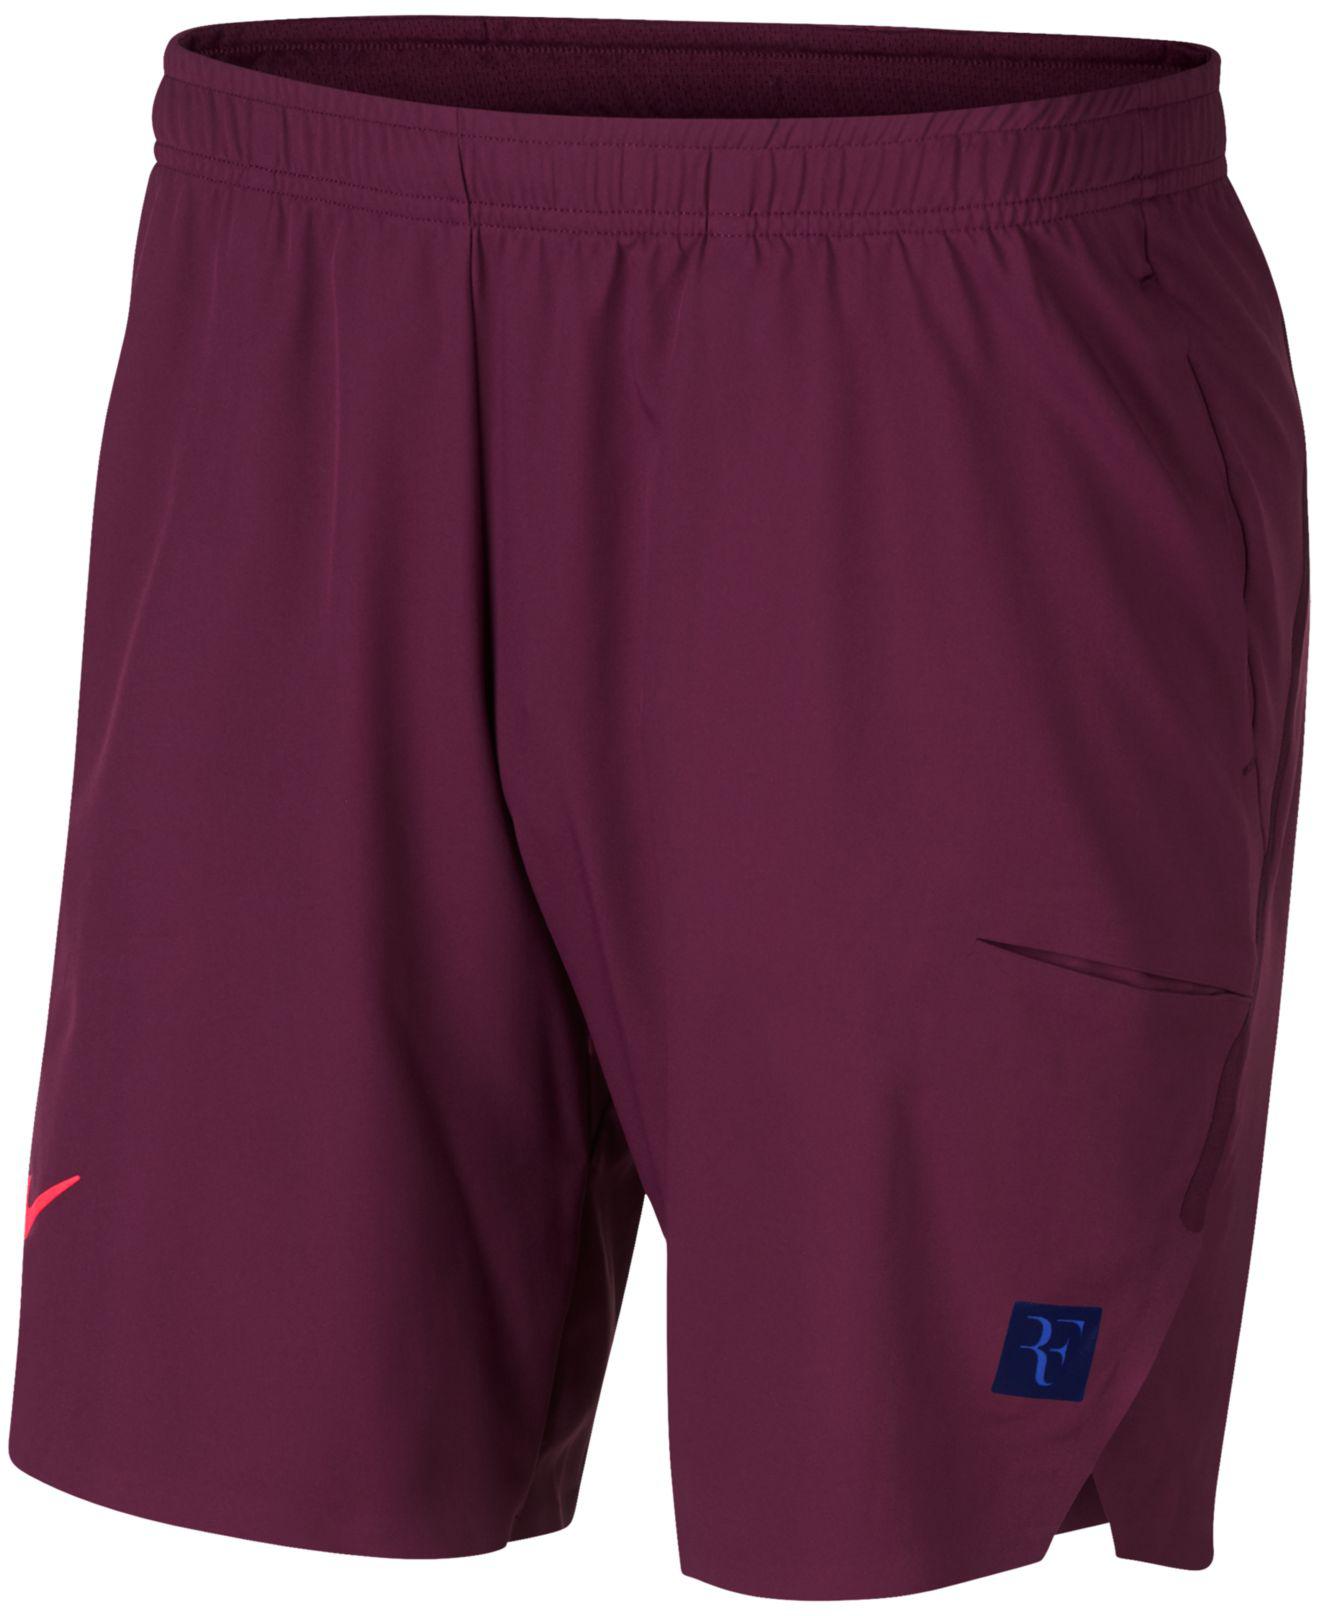 Nike Synthetic Court Ace Flex Roger Federer 9" Tennis Shorts in Bordeaux  (Purple) for Men - Lyst